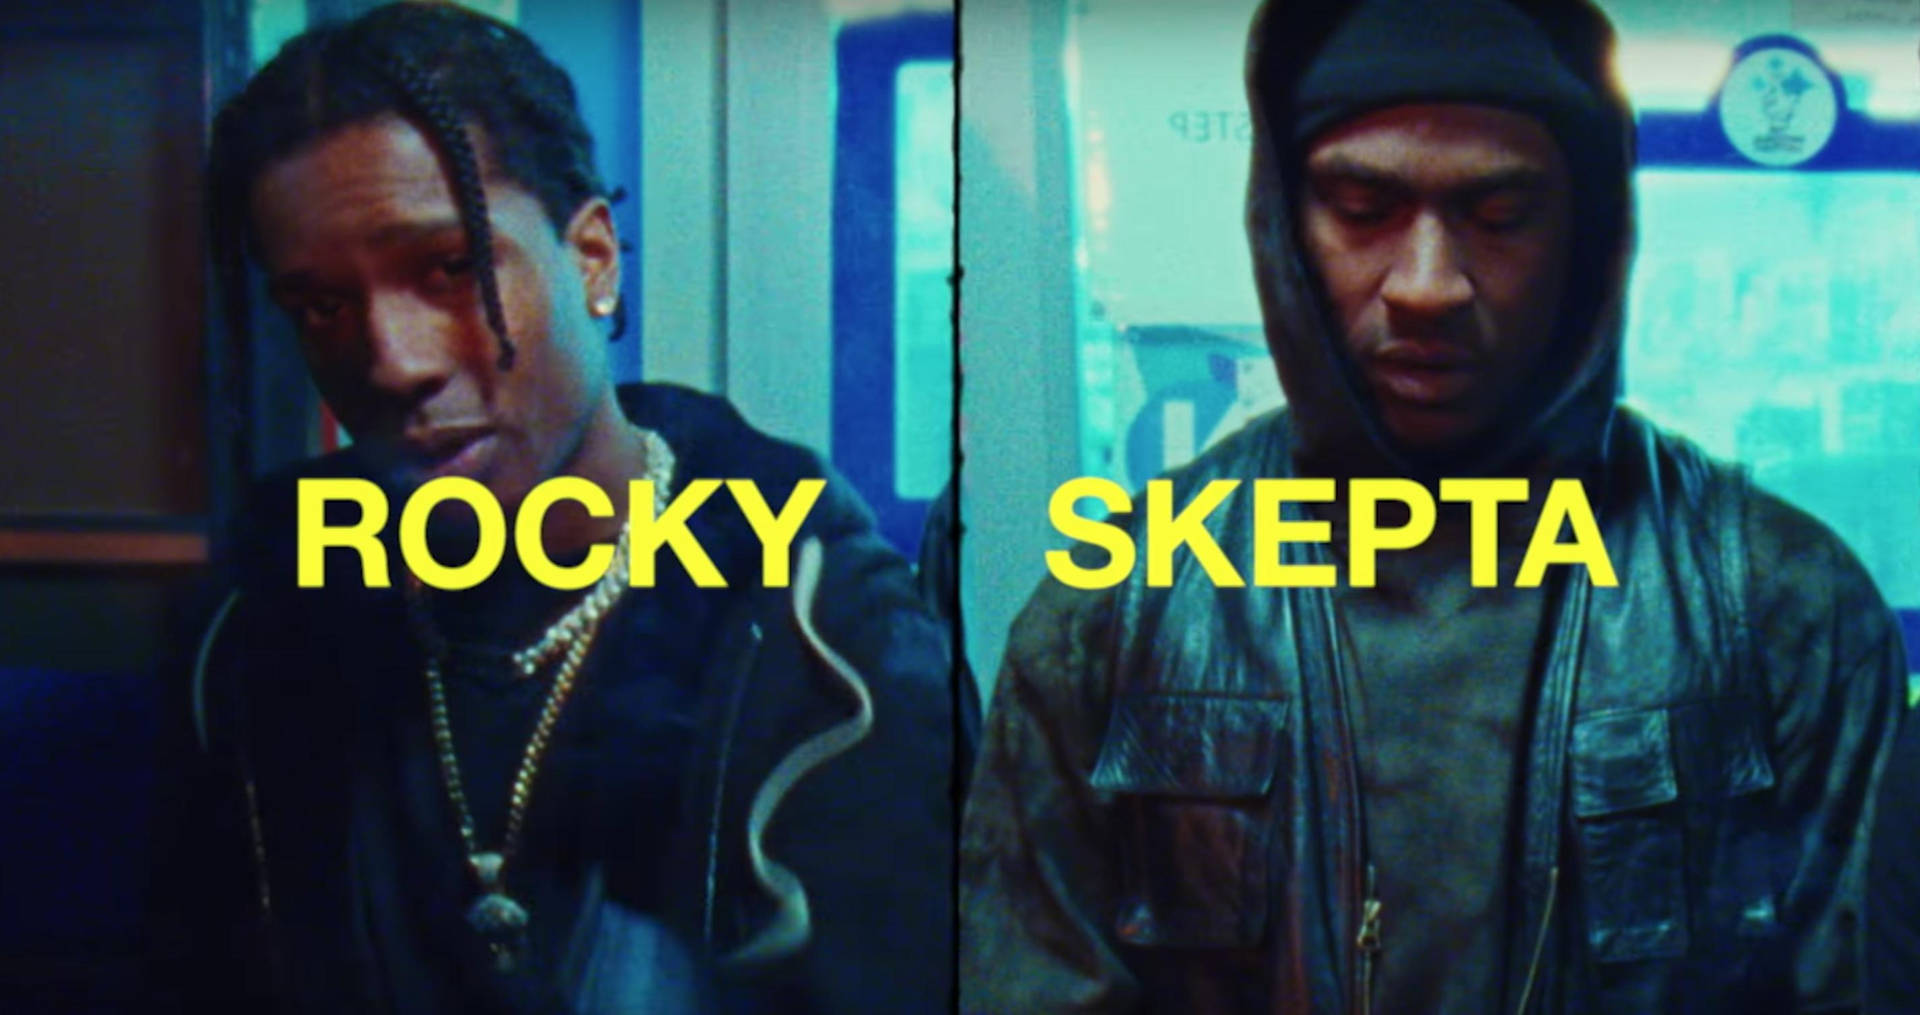 A$AP Rocky and Skepta Wallpaper